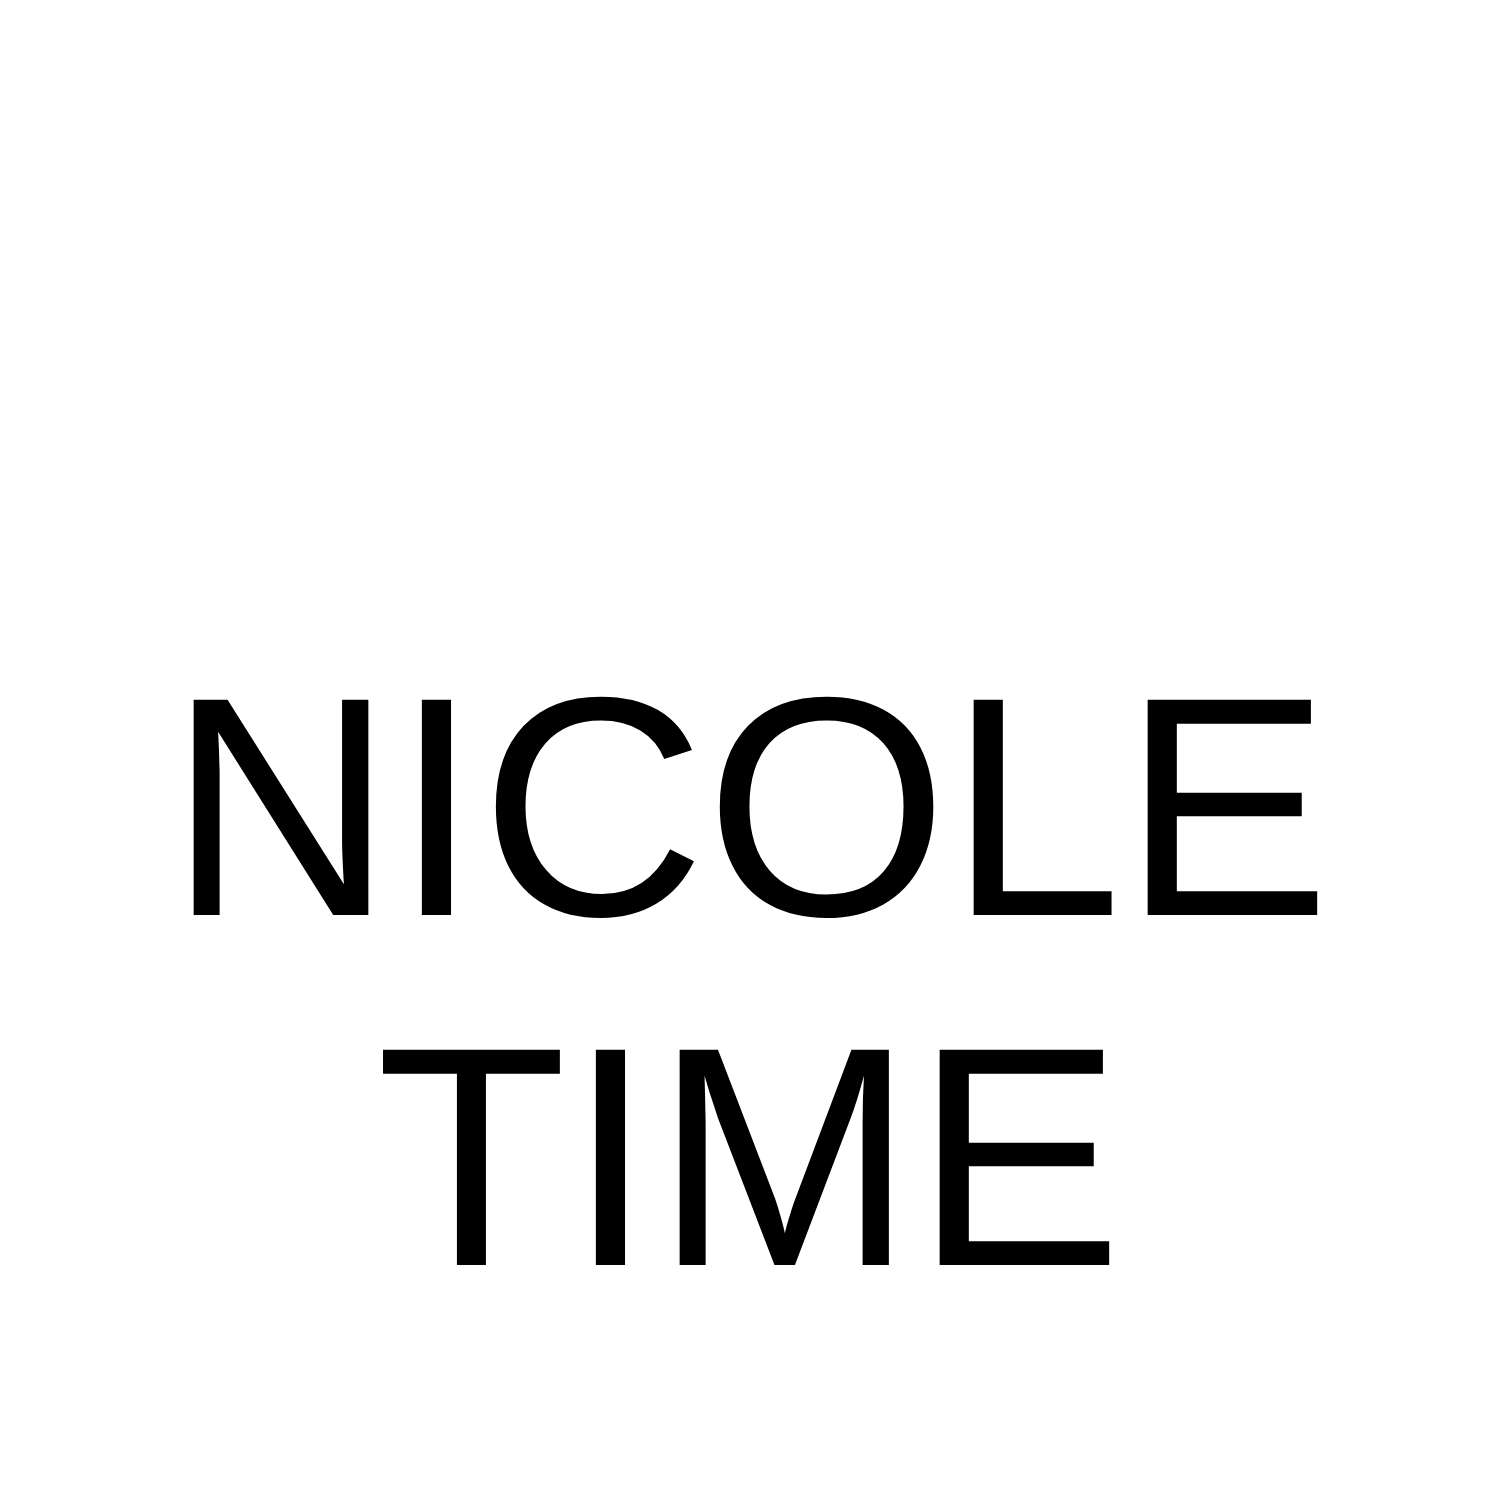 NICOLE TIME